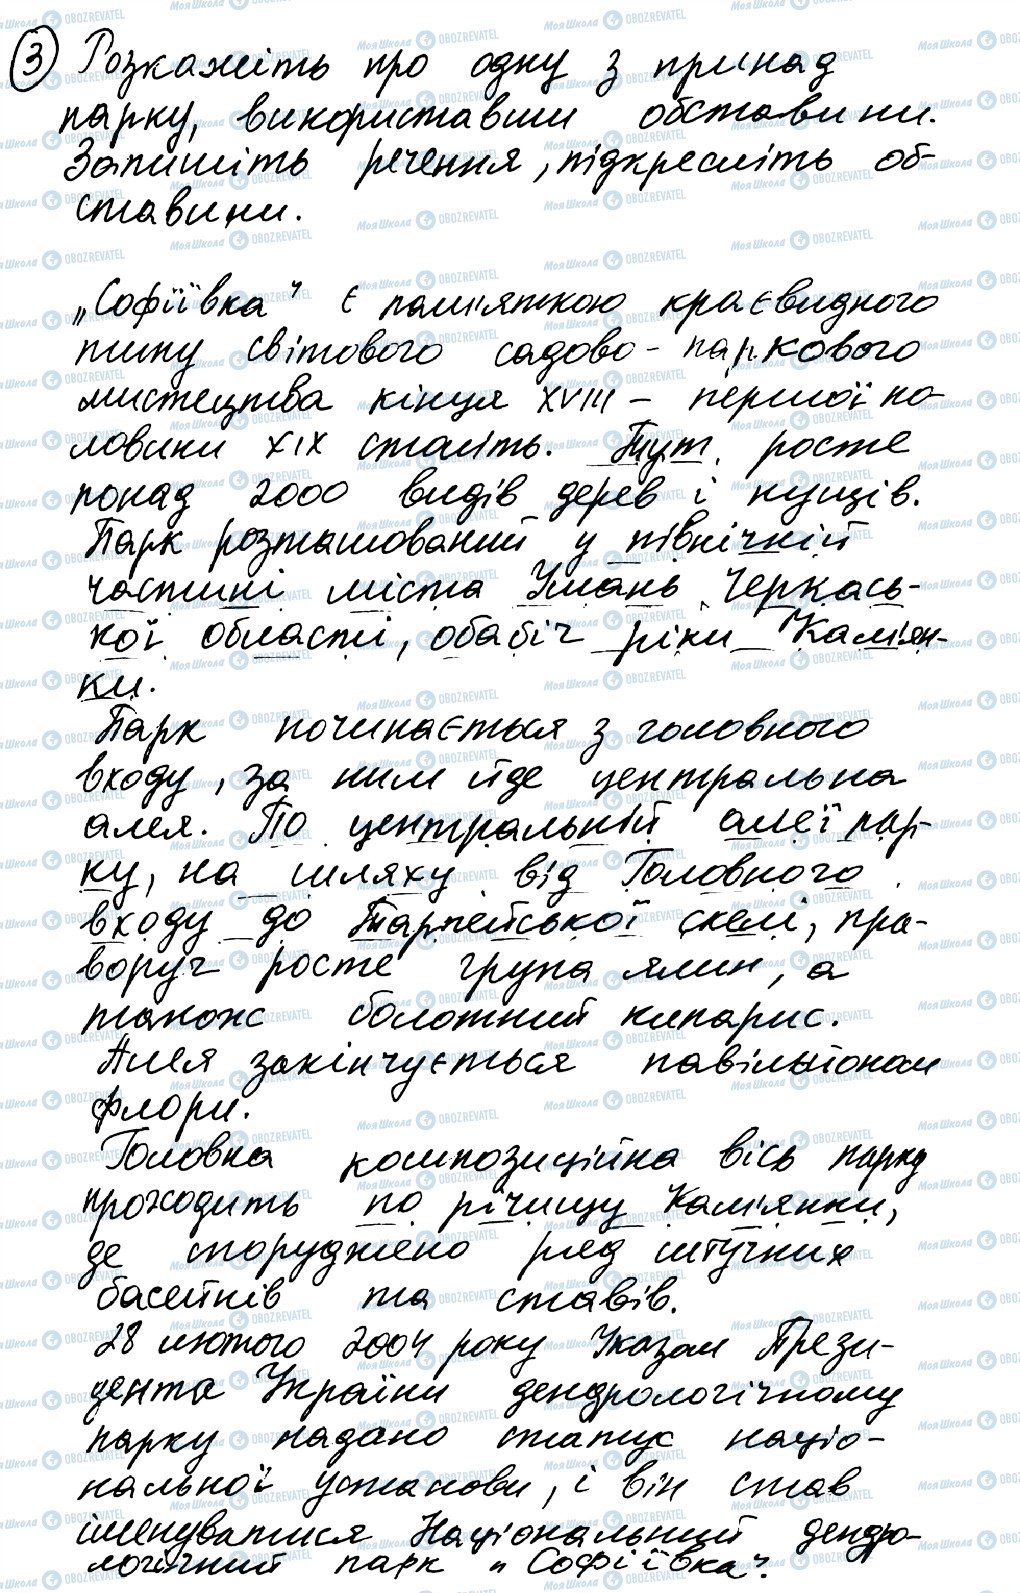 ГДЗ Укр мова 8 класс страница 3